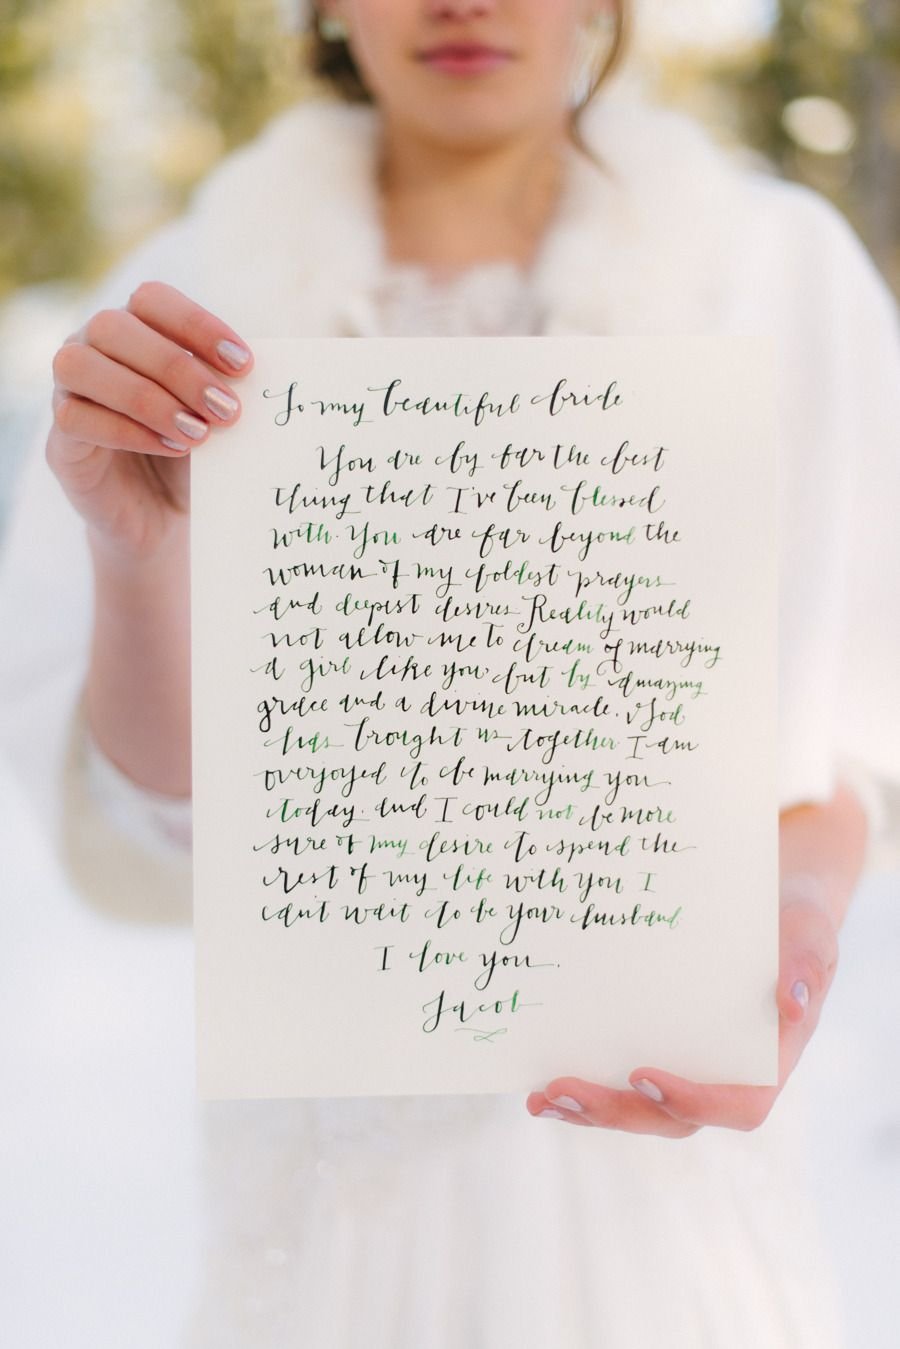 Любовное письмо на свадьбу